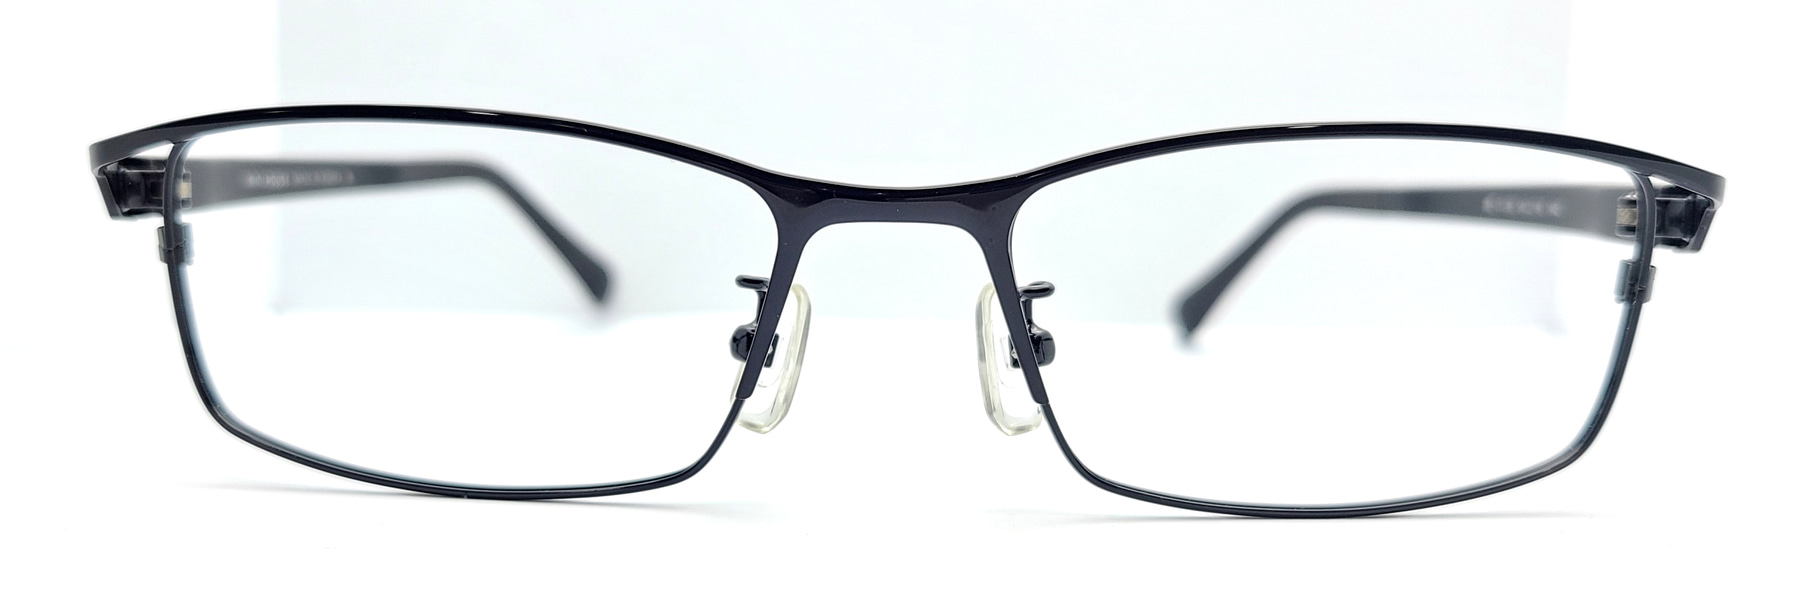 MINIHOUSE M-1138, Korean glasses, sunglasses, eyeglasses, glasses